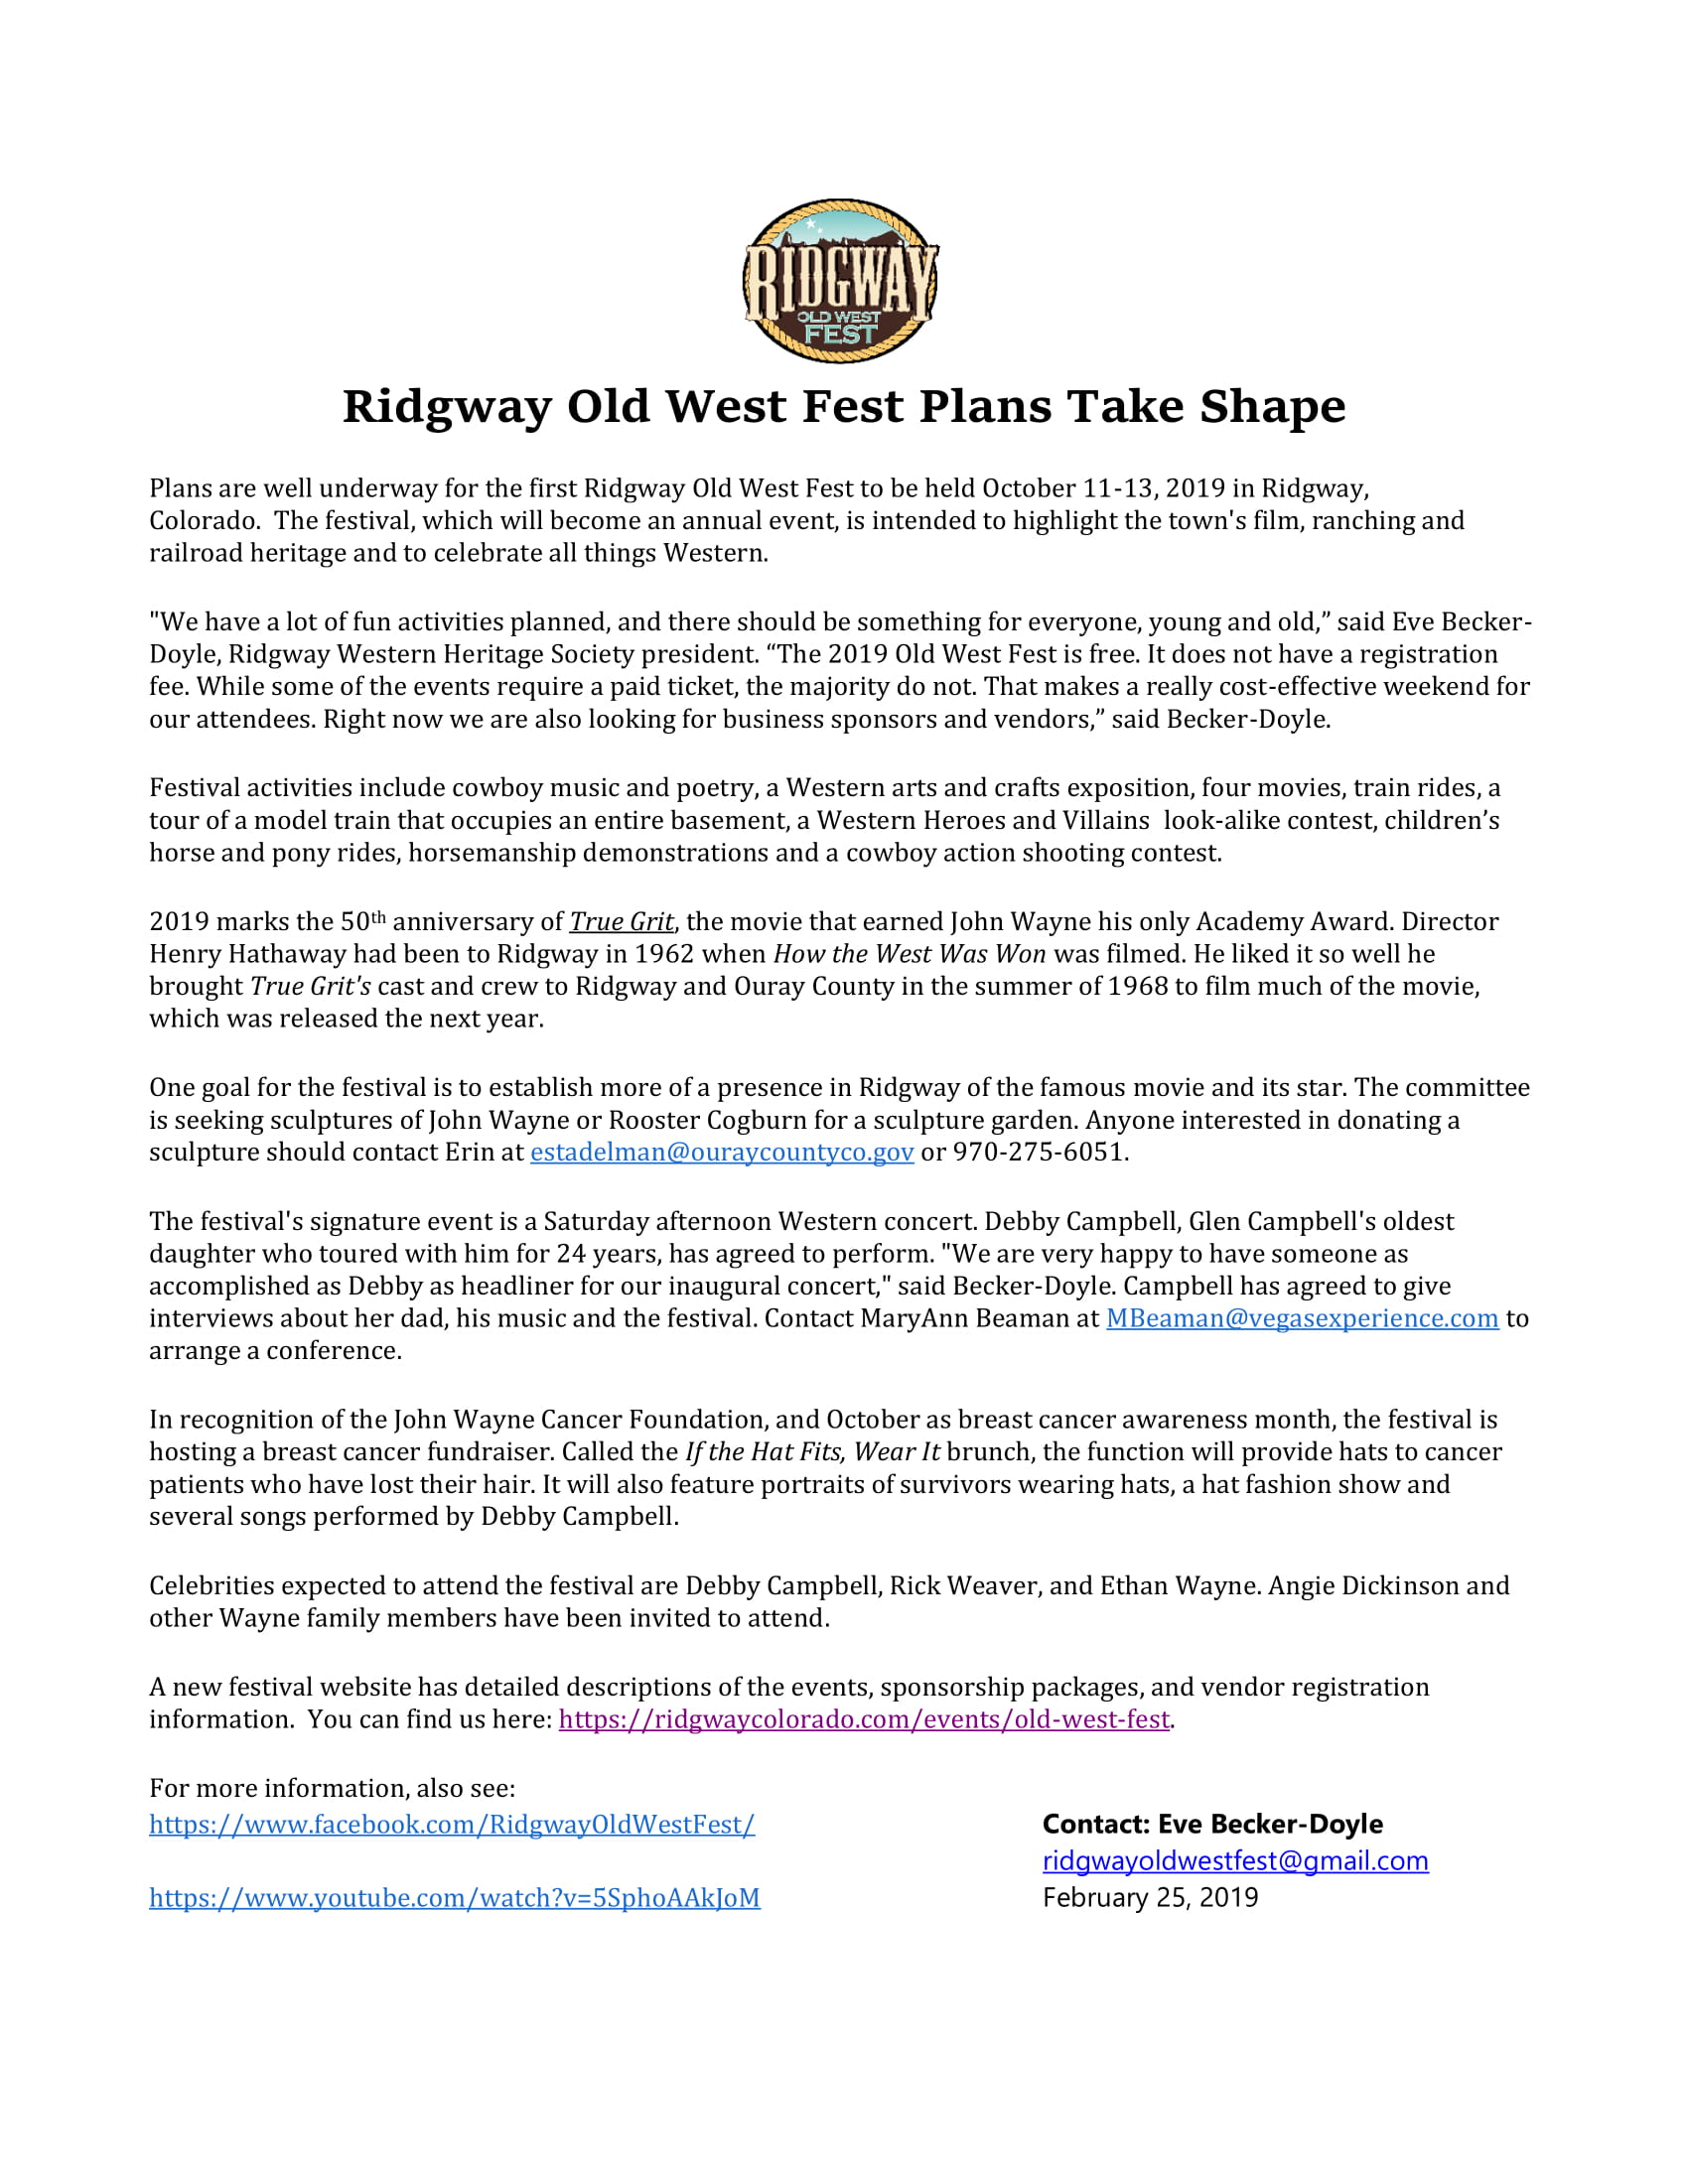 Press Release for Ridgway Old West Fest True Grit Festival